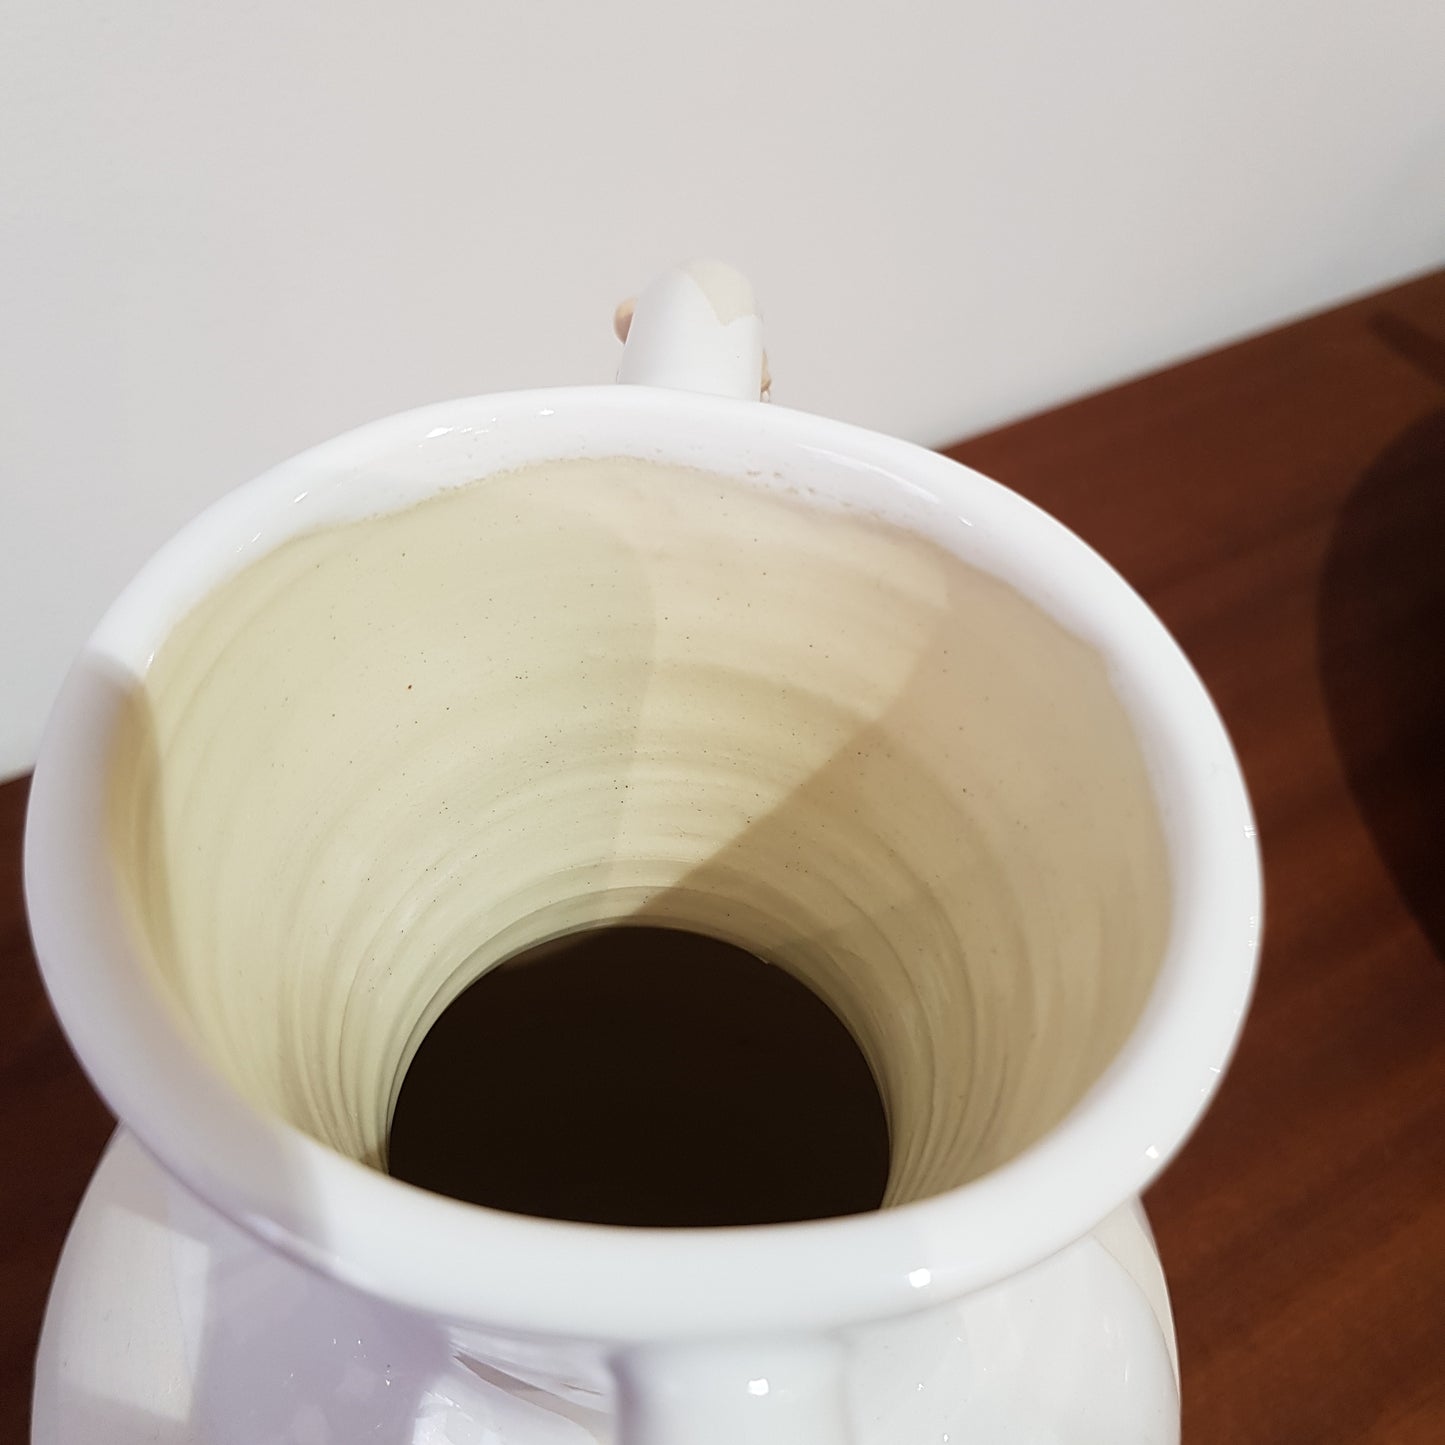 Vase blanc avec perles - Maison Bonjour